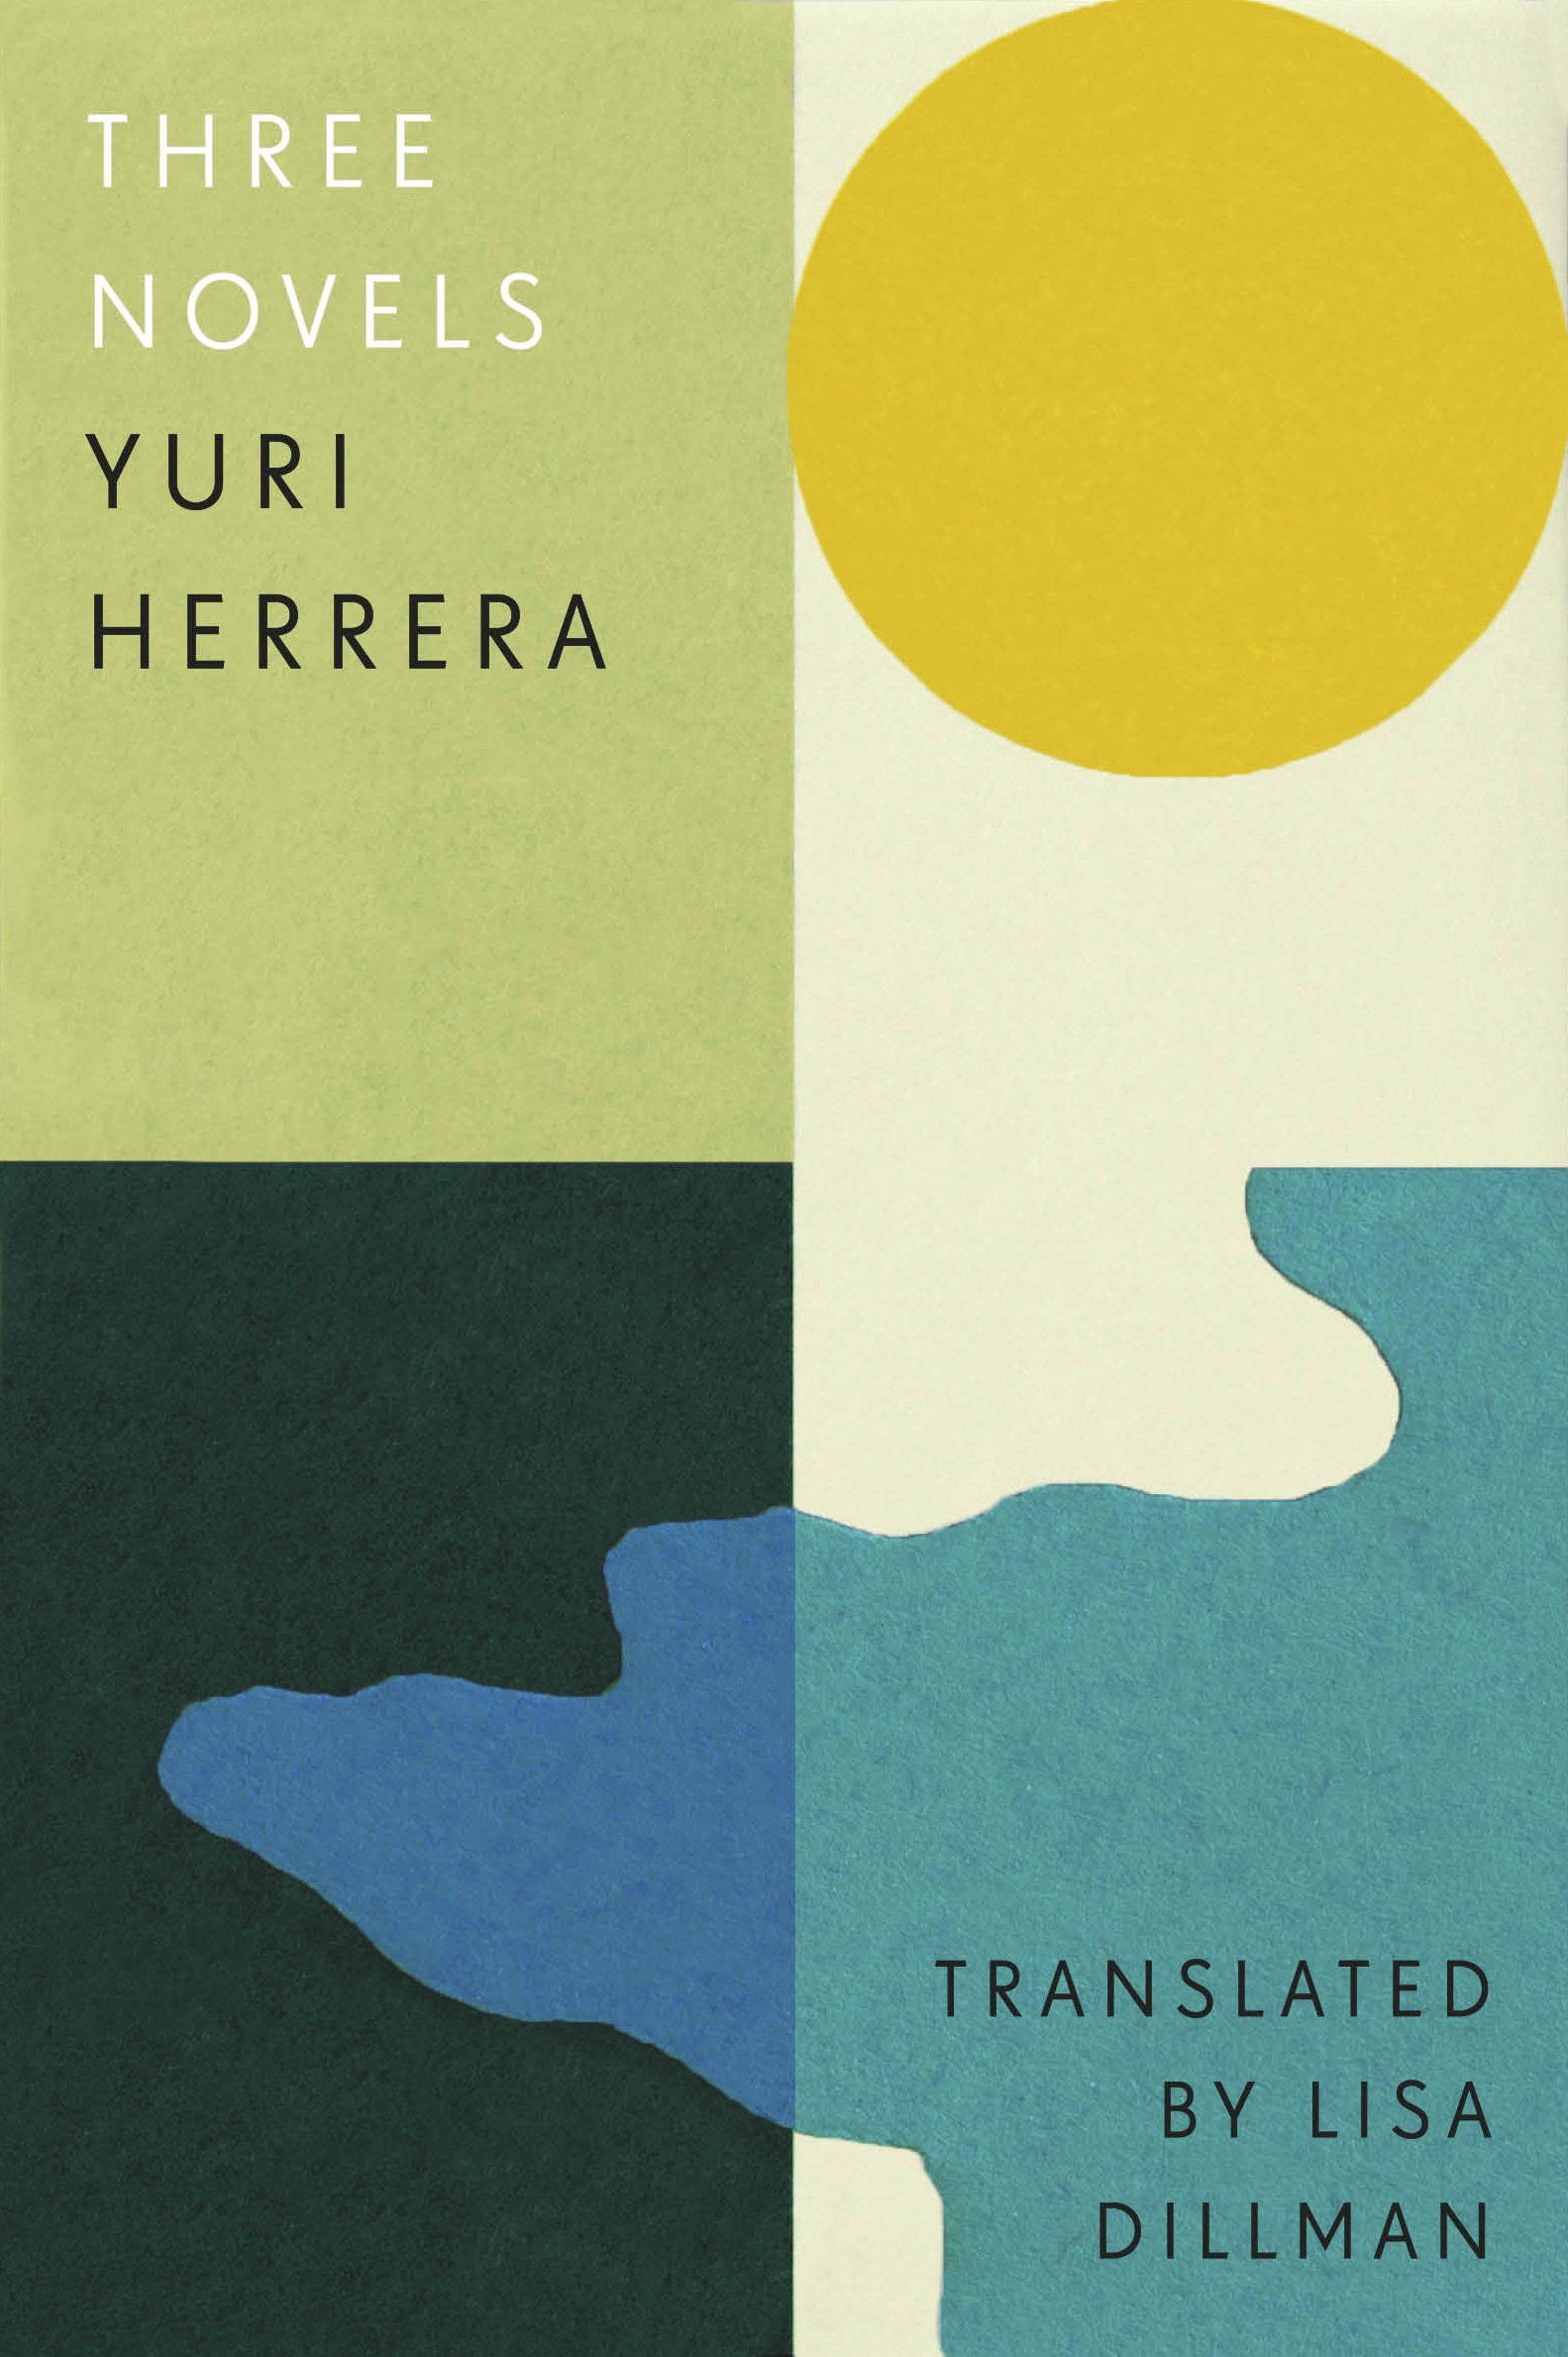 Three Novels by Yuri Herrera and translated by Lisa Dillman